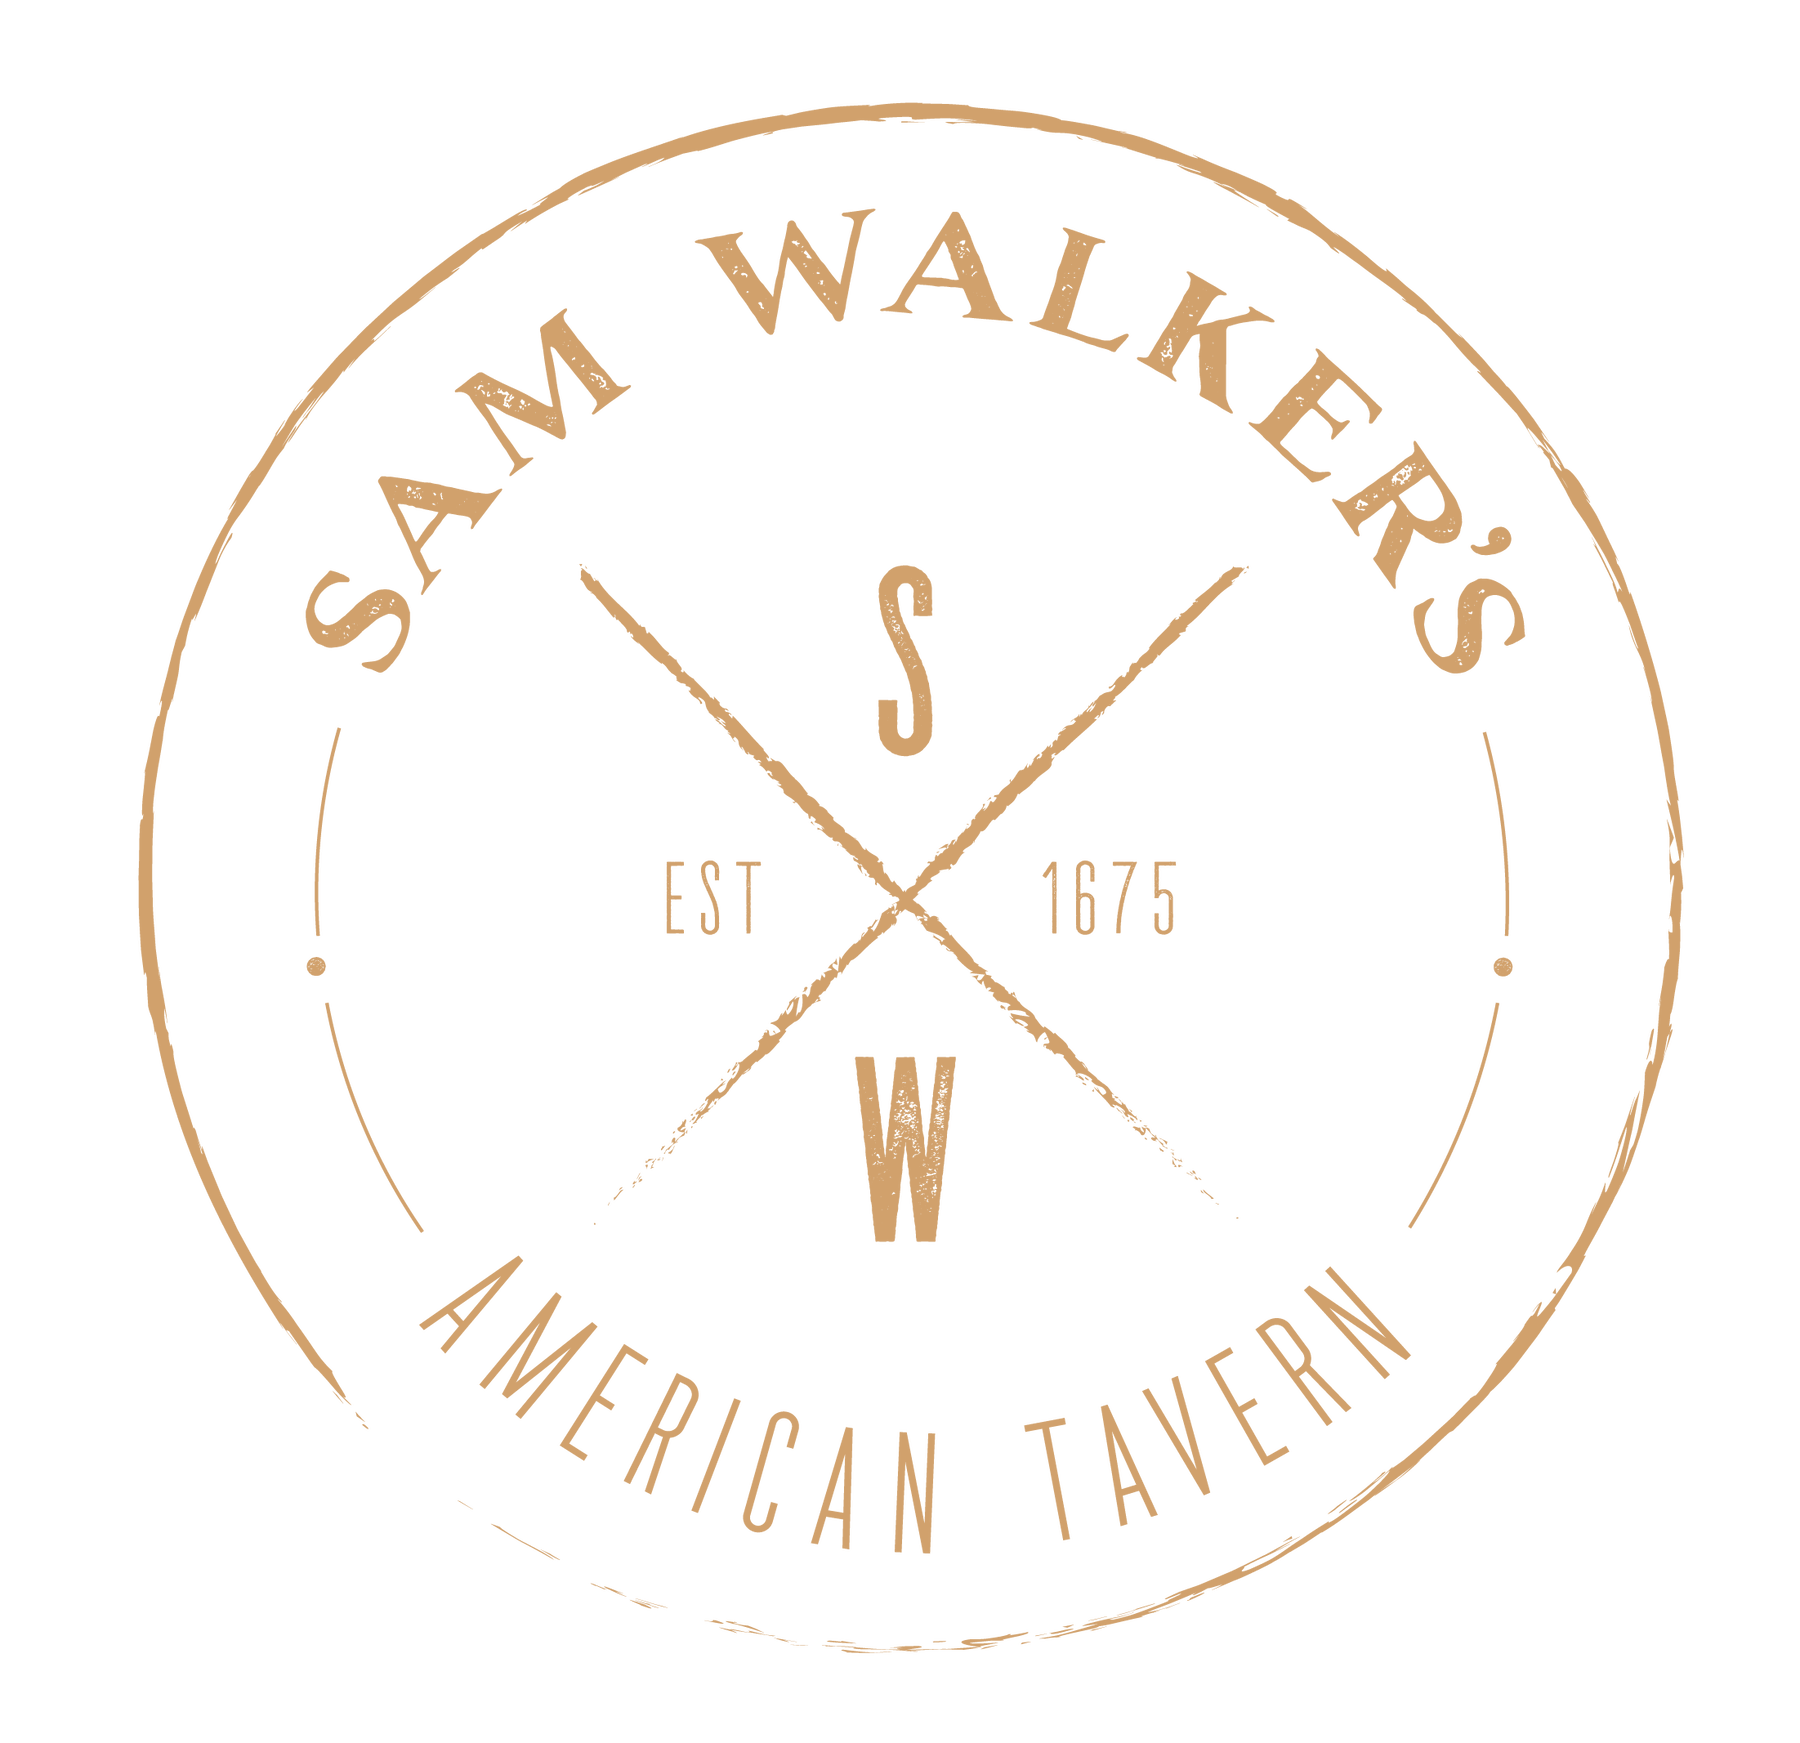 Sam Walker's American Tavern Home